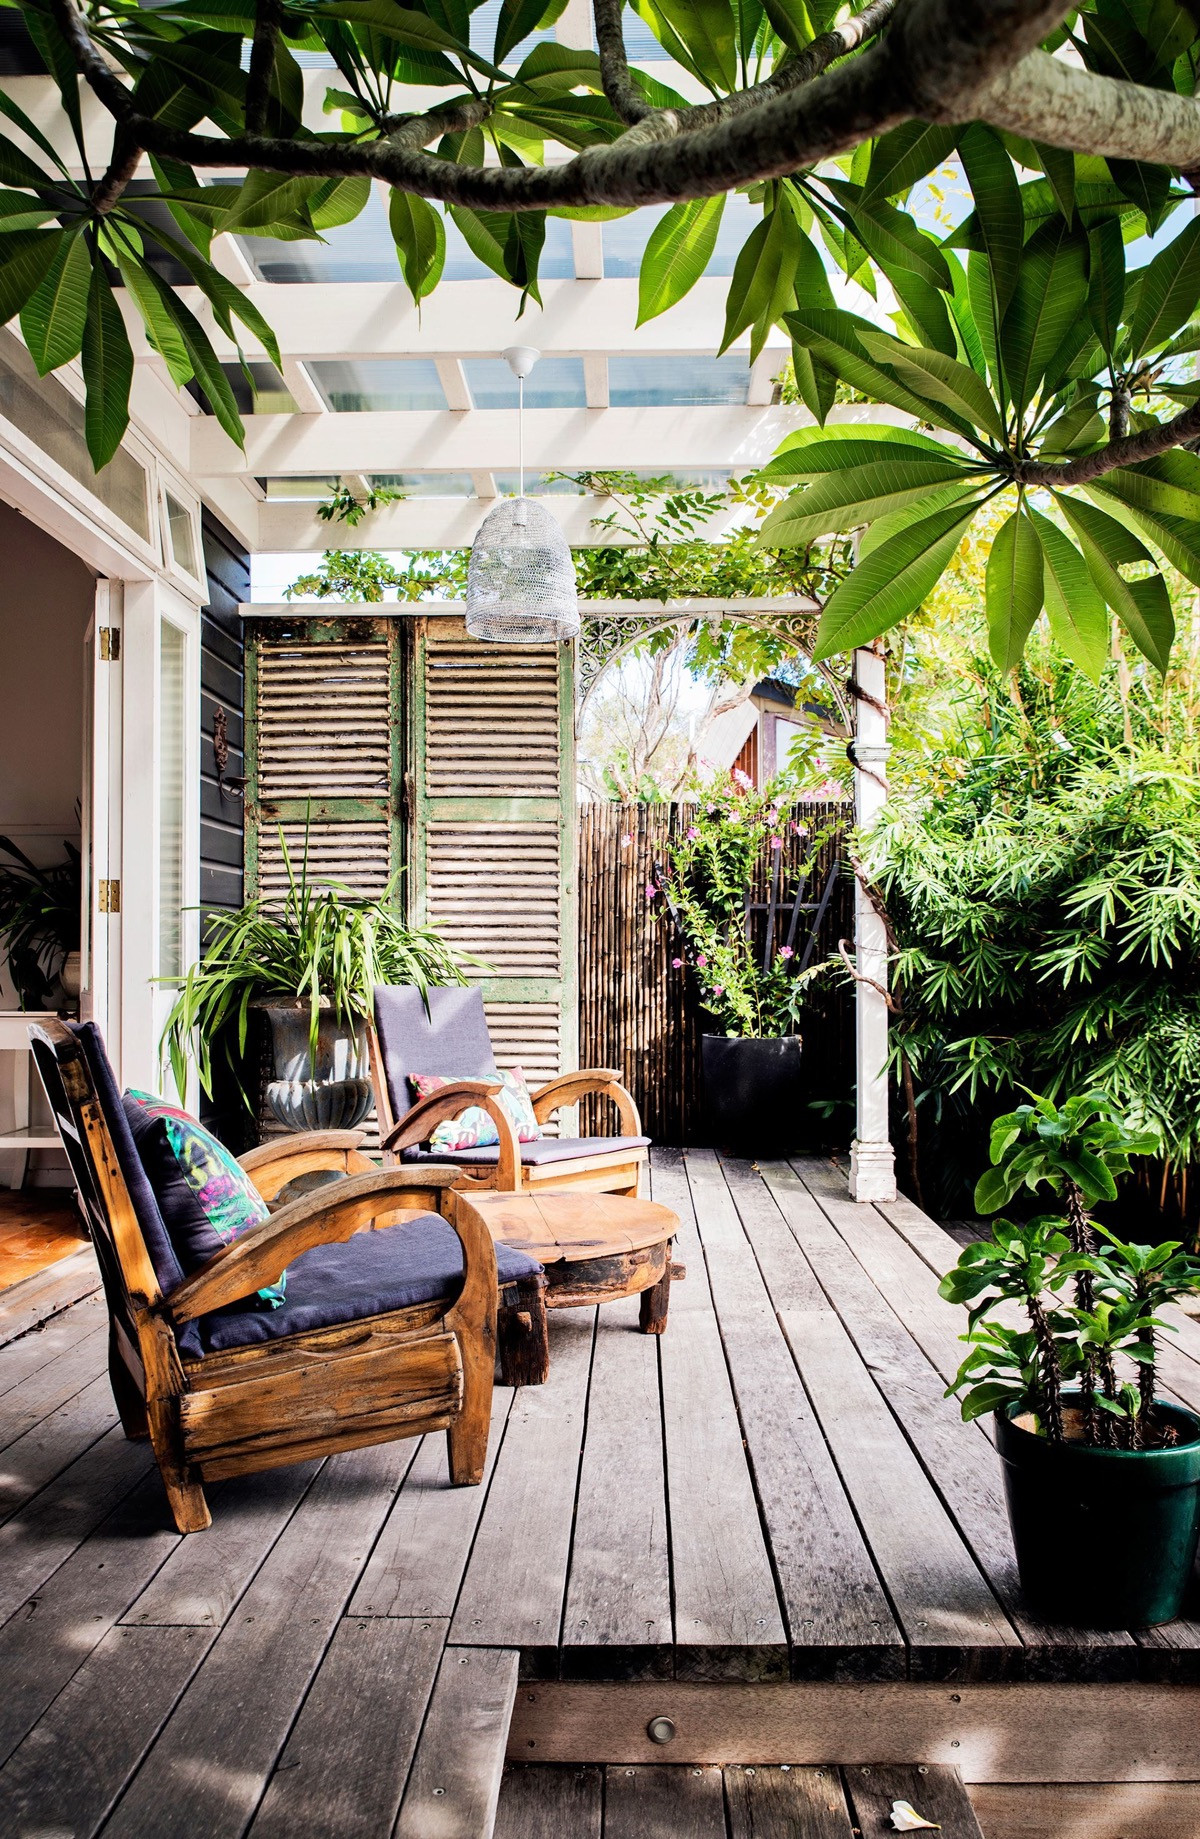 Backyard Deck And Patio Ideas
 50 Gorgeous Outdoor Patio Design Ideas